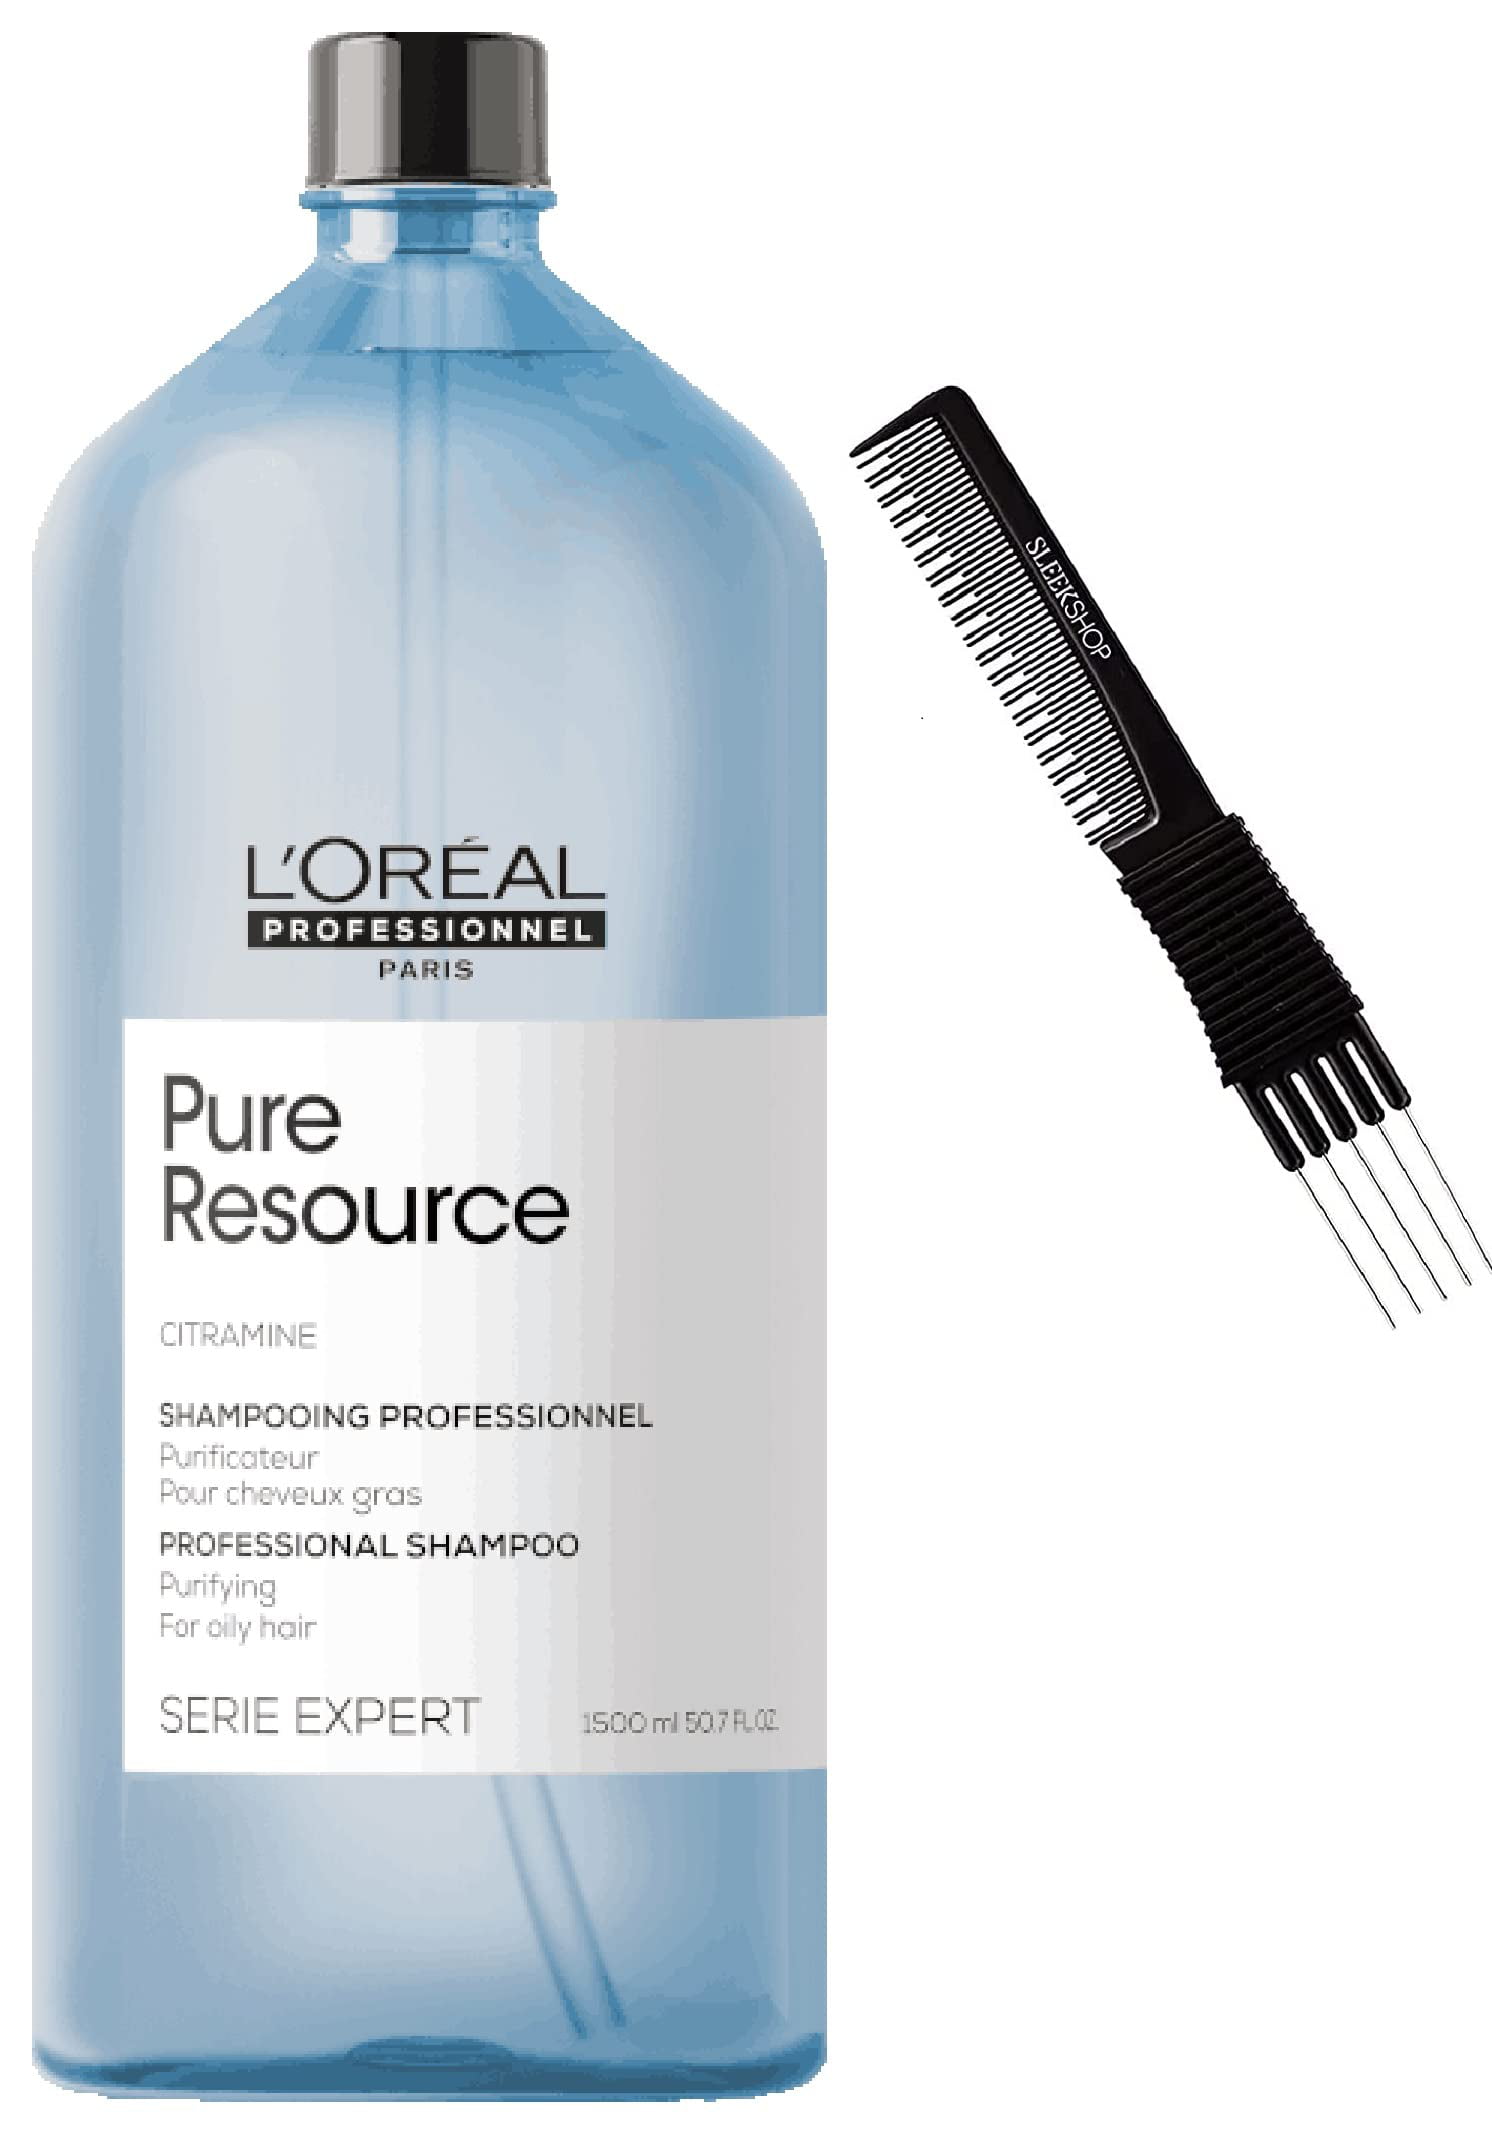 L'oreal SERIE EXPERT Pure Resource Citramine Professional Shampoo, Purifying for Oily Hair (w/ Sleek Loreal Teasing Comb) RESOURCE SHAMPOO - 50.7 oz / 1500ml) - Walmart.com